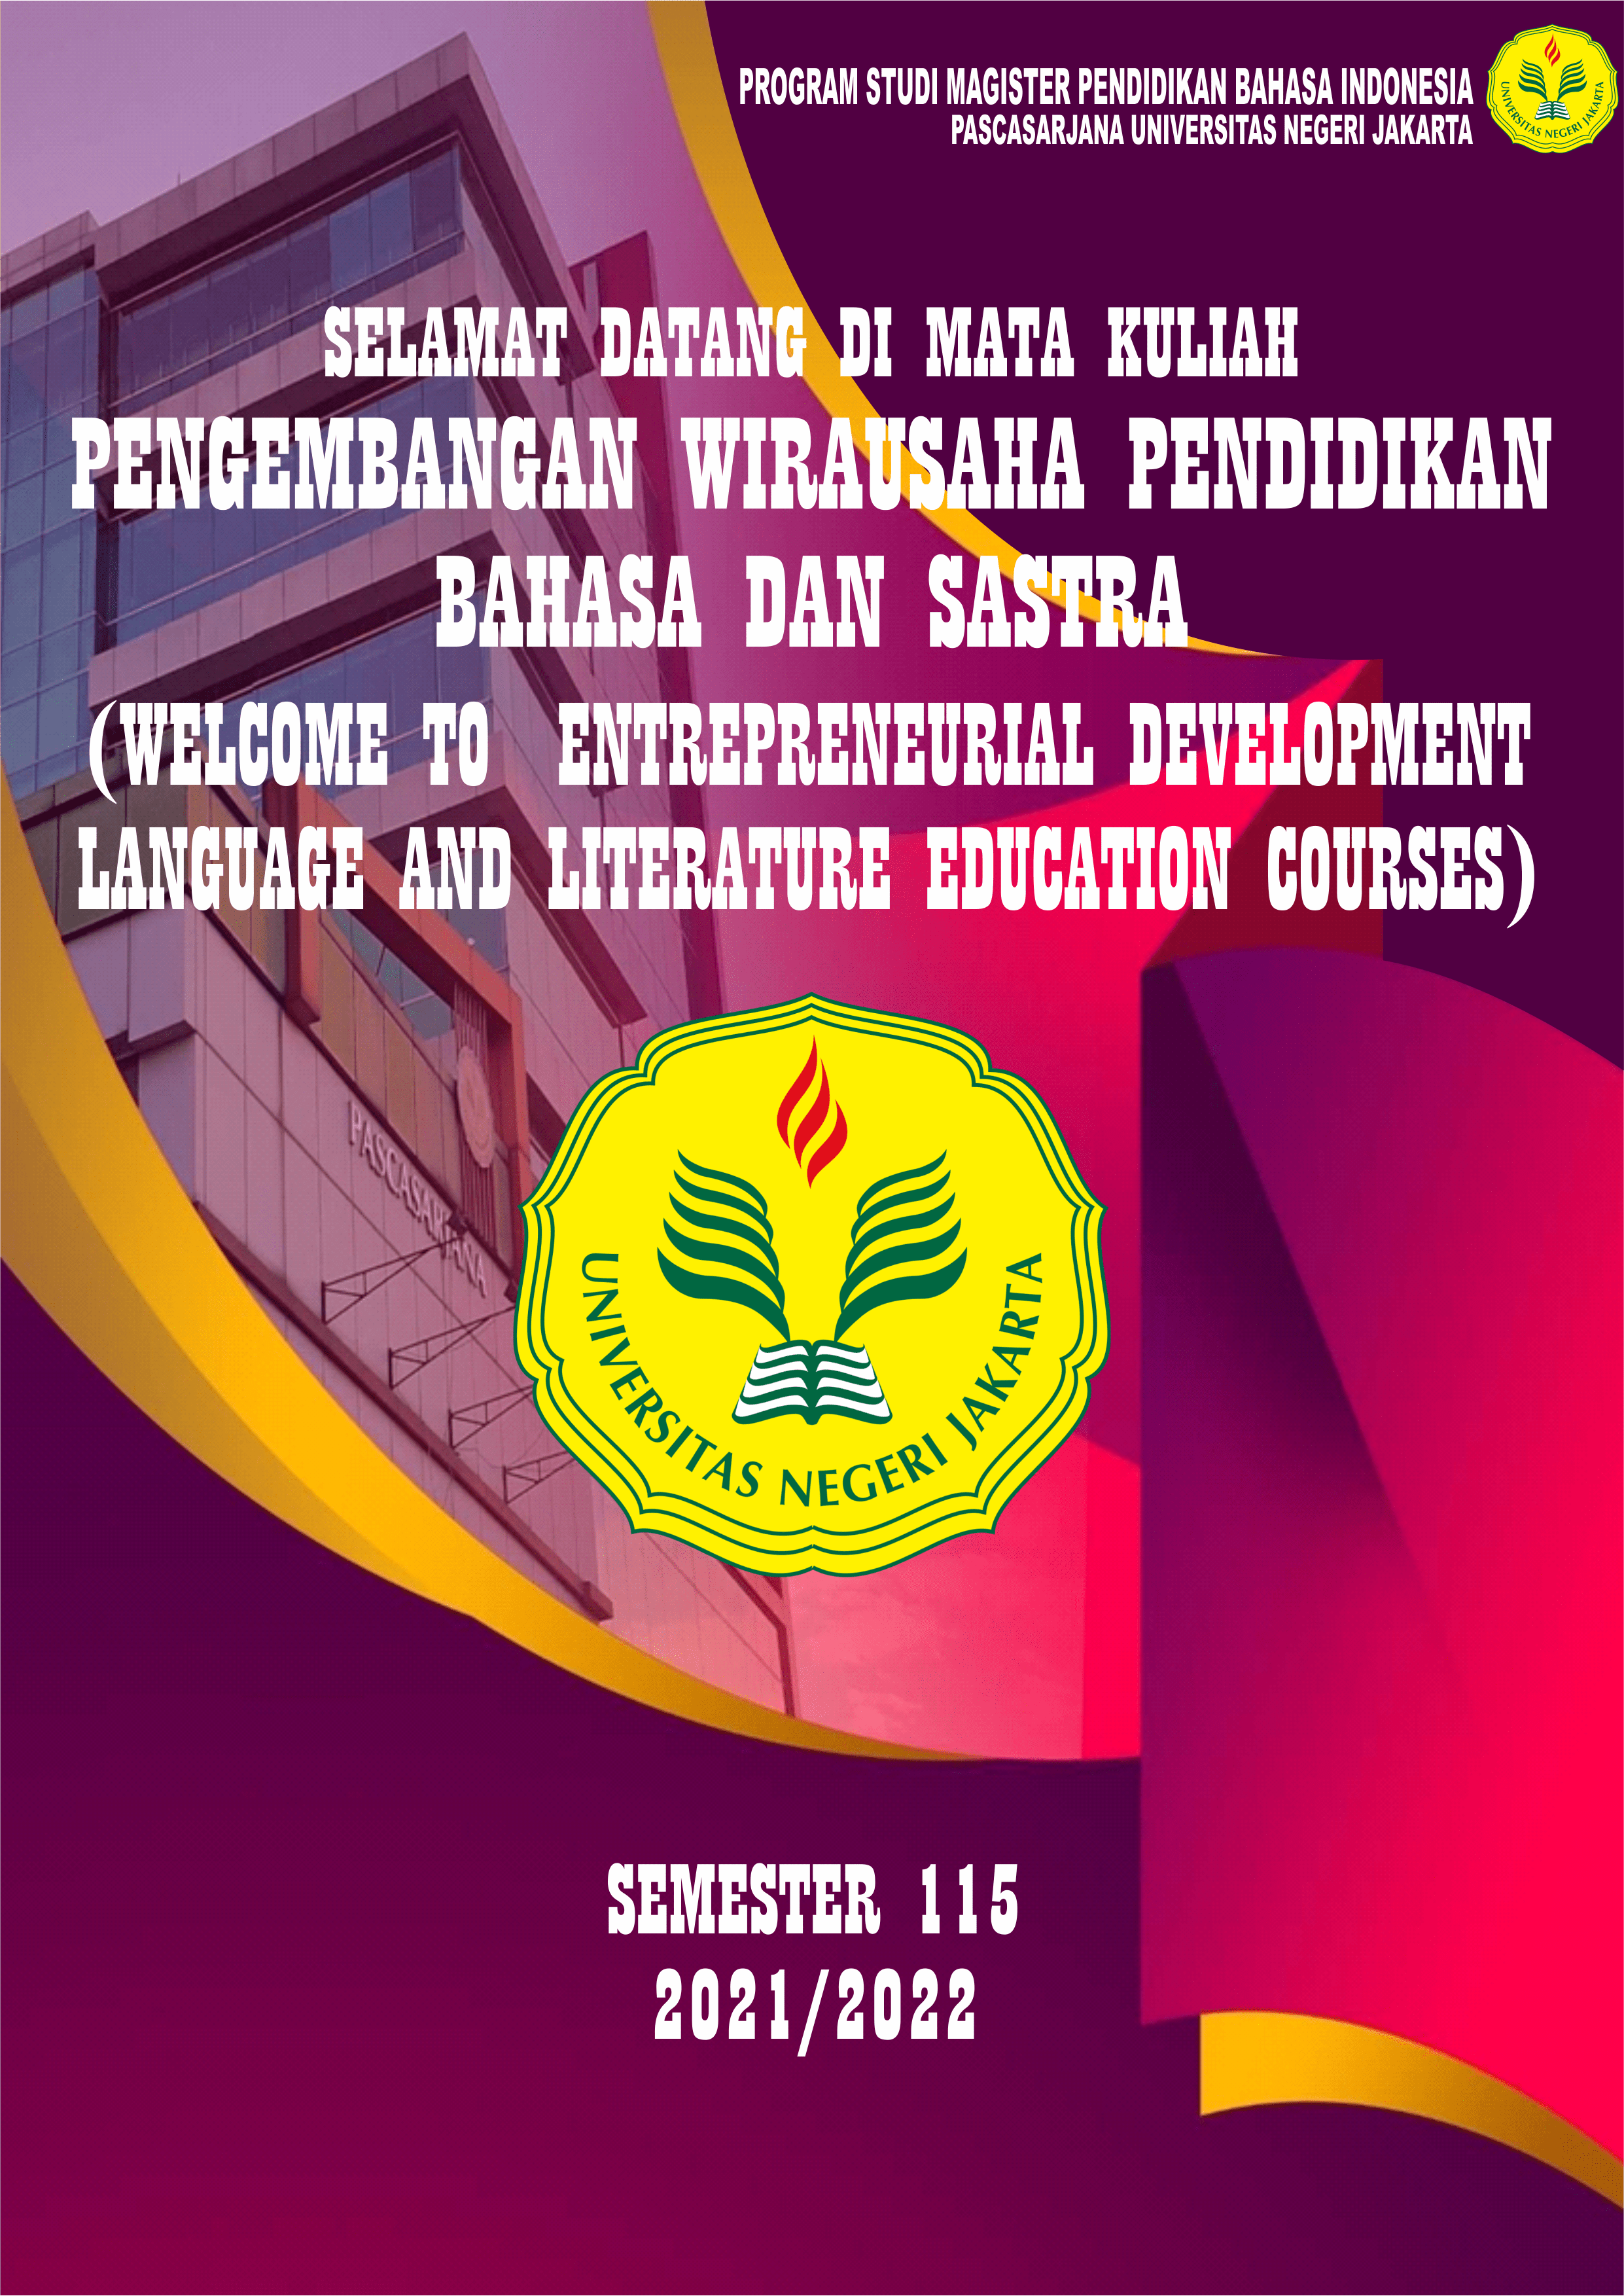 114 Entrepreneurial Development in Language and Literature education